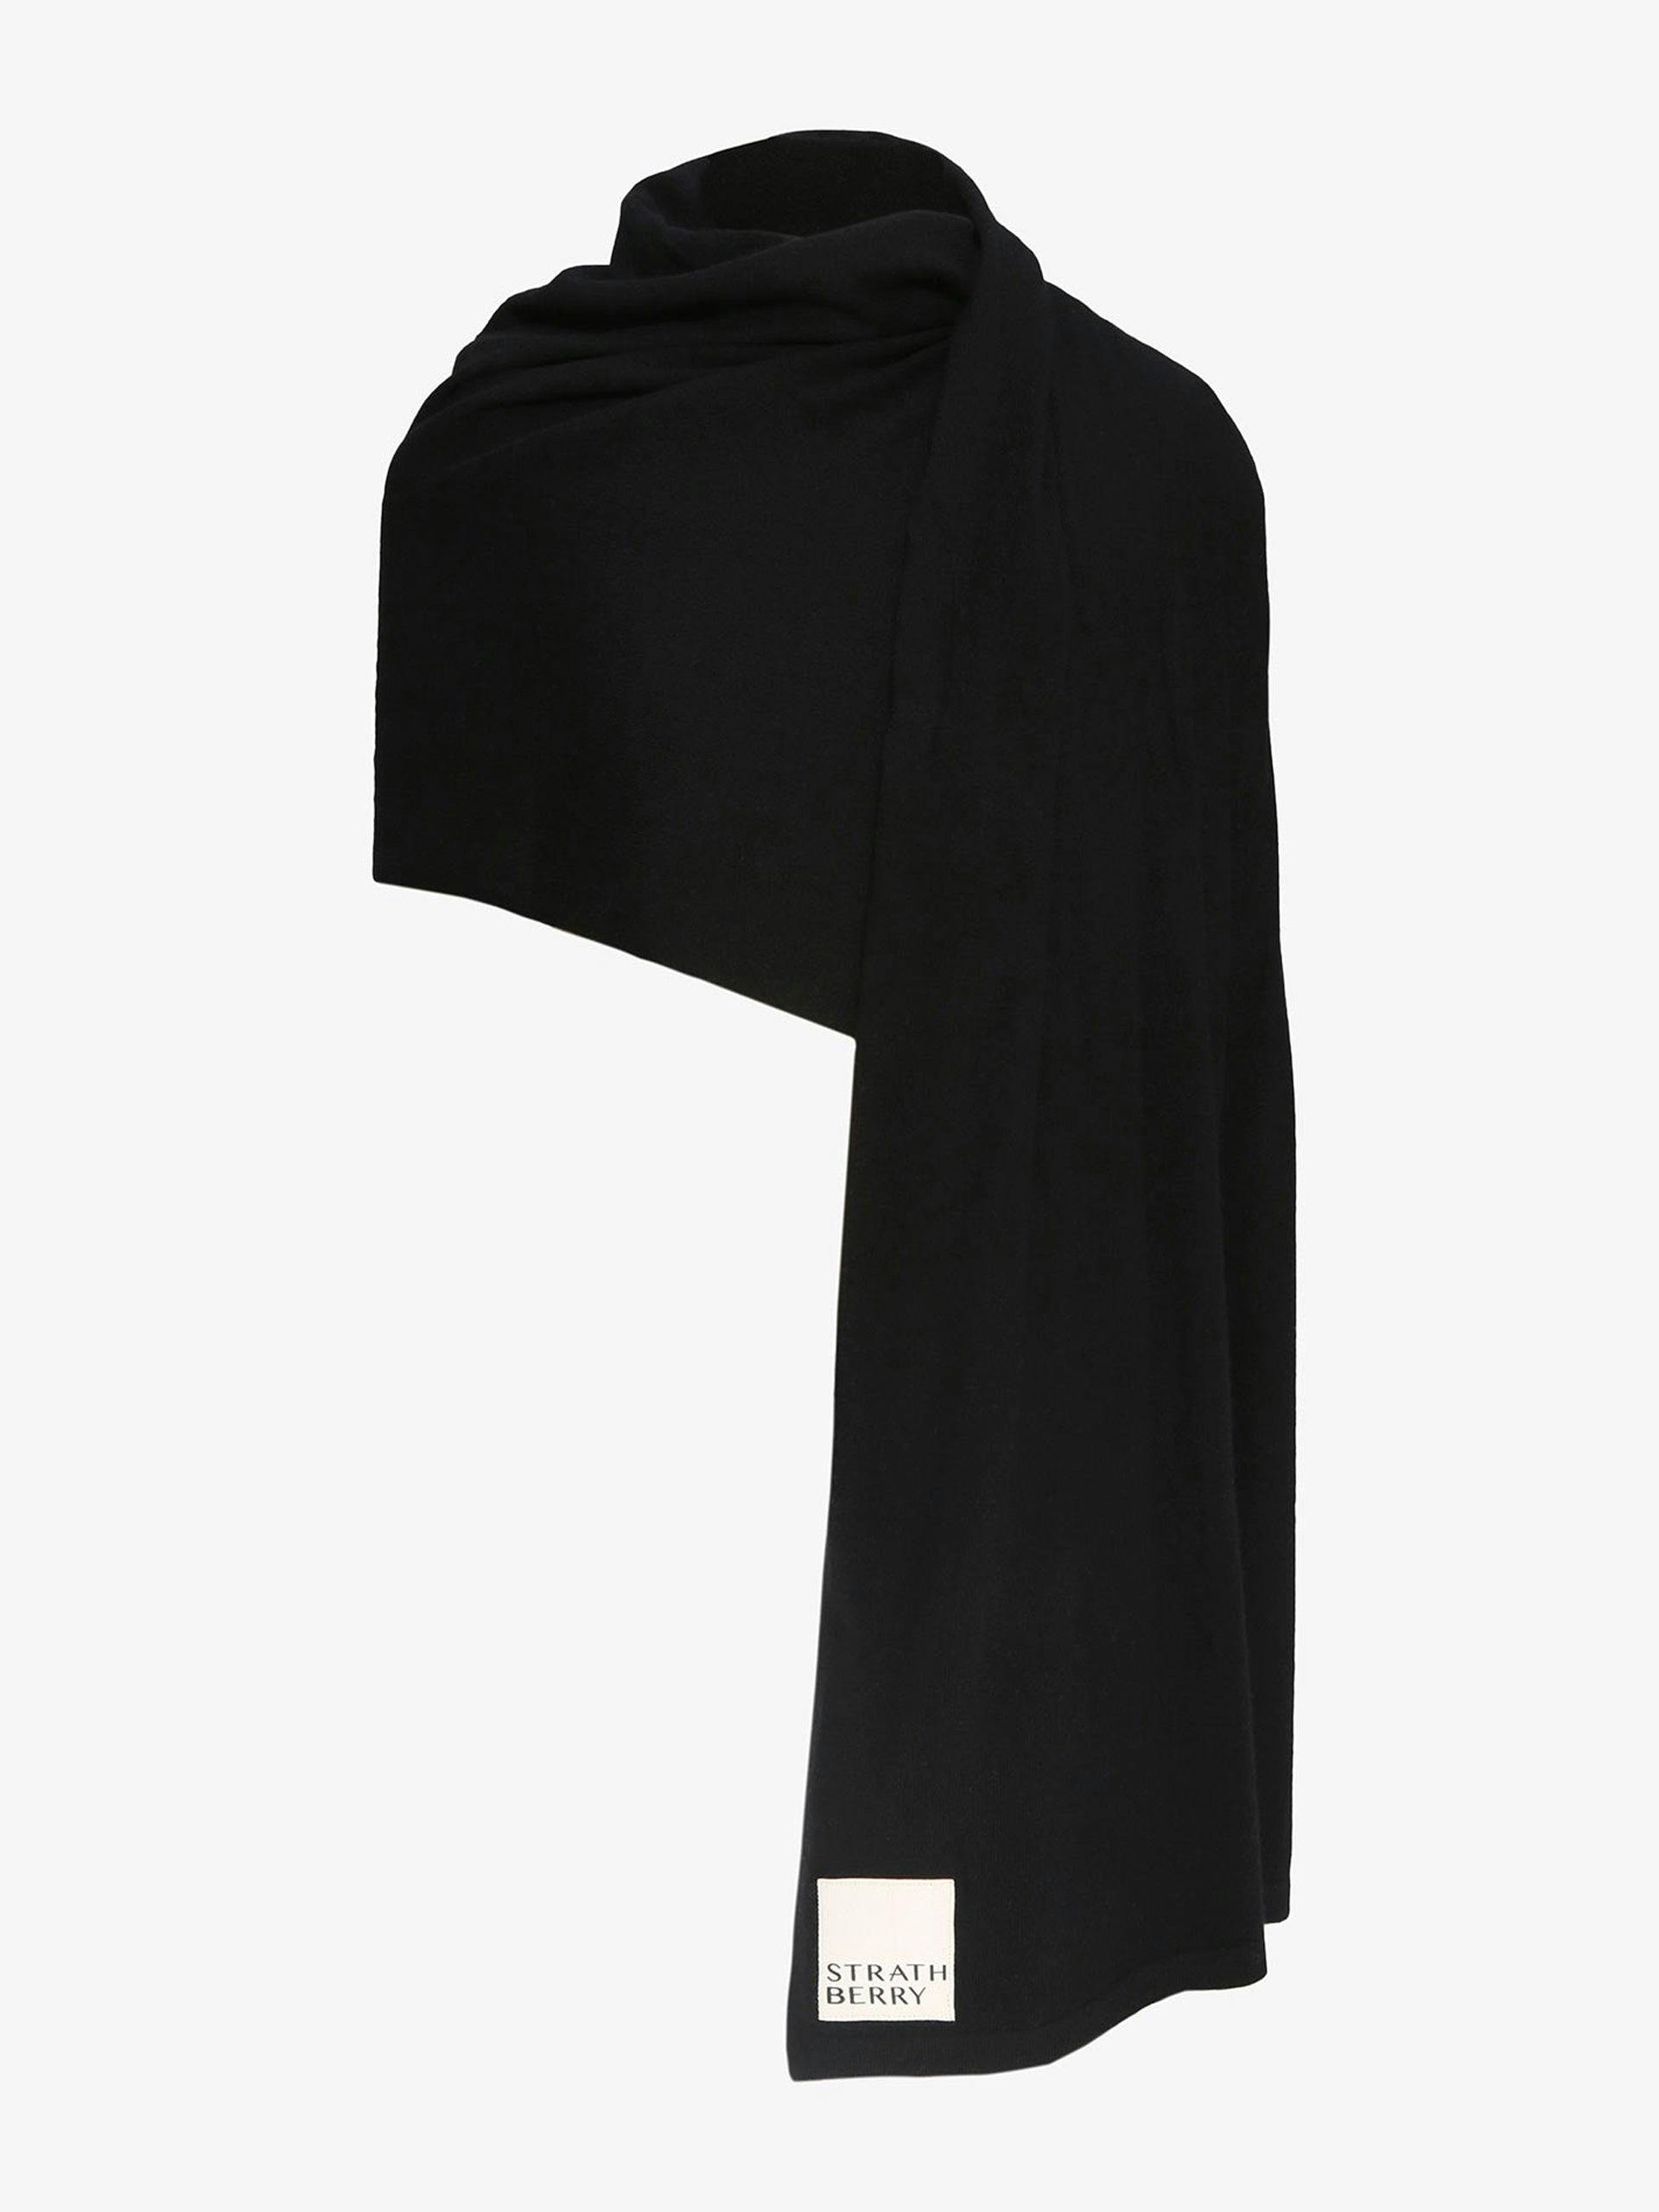 Black cashmere travel wrap